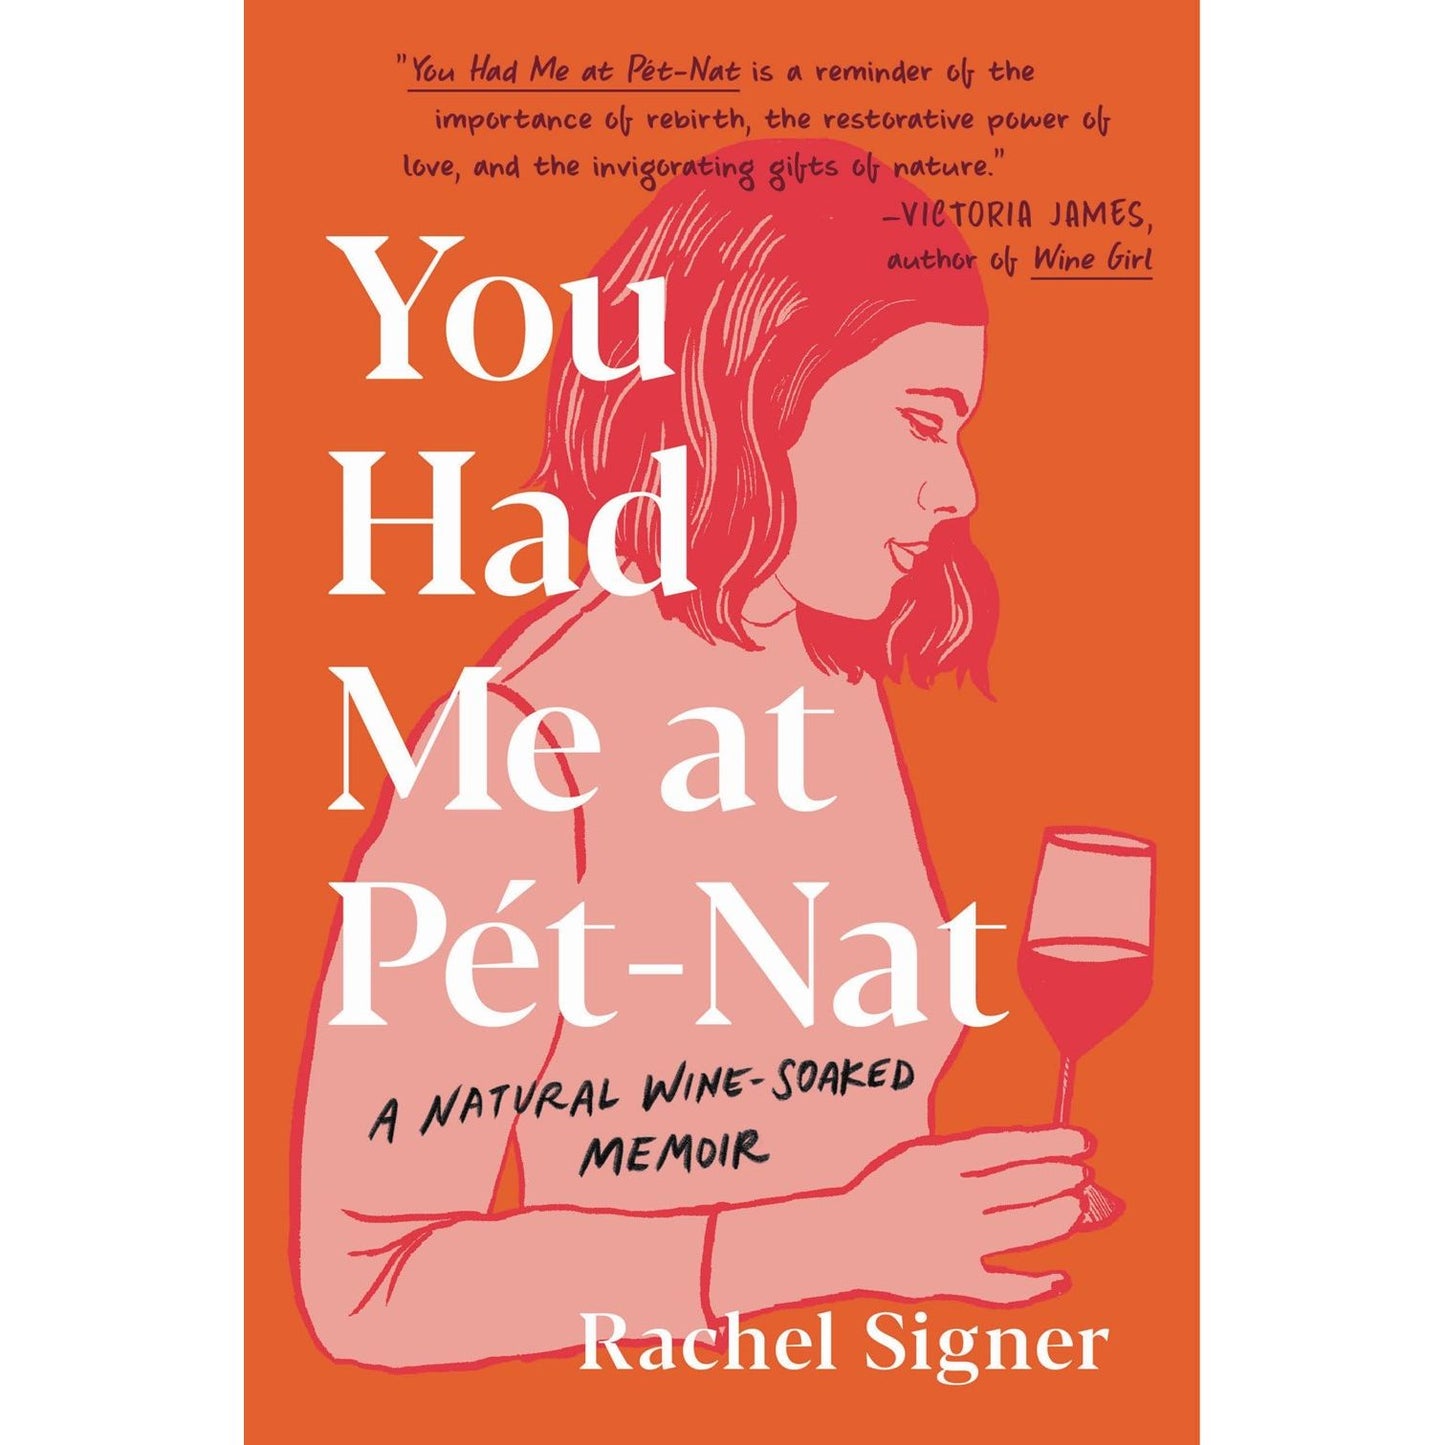 You Had Me at Pet-Nat (Rachel Signer)